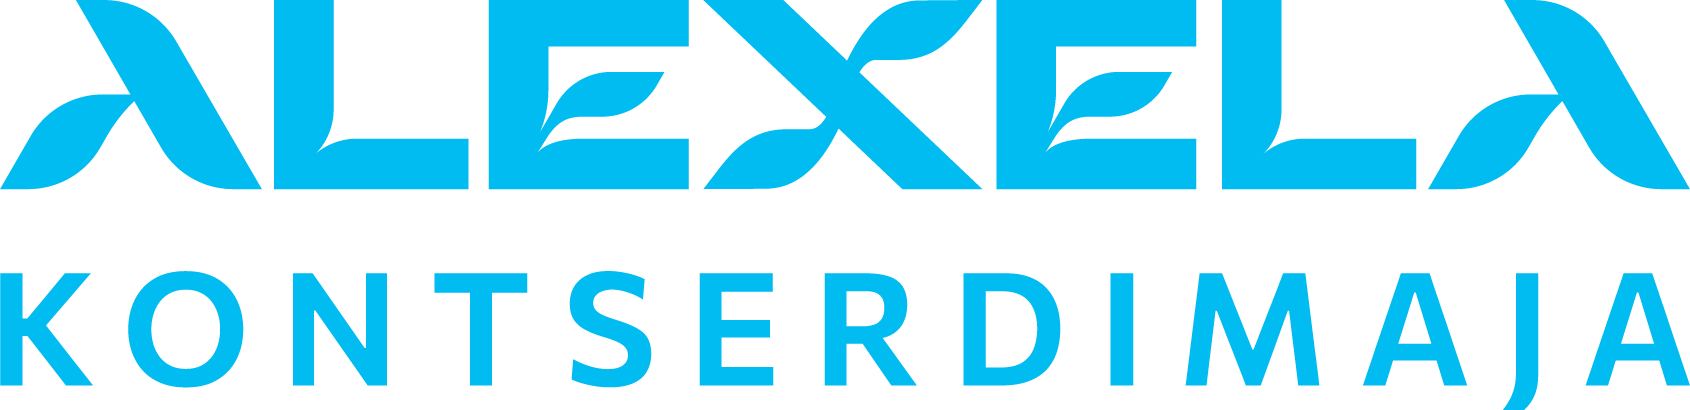 Alexela Kontserdimaja logo